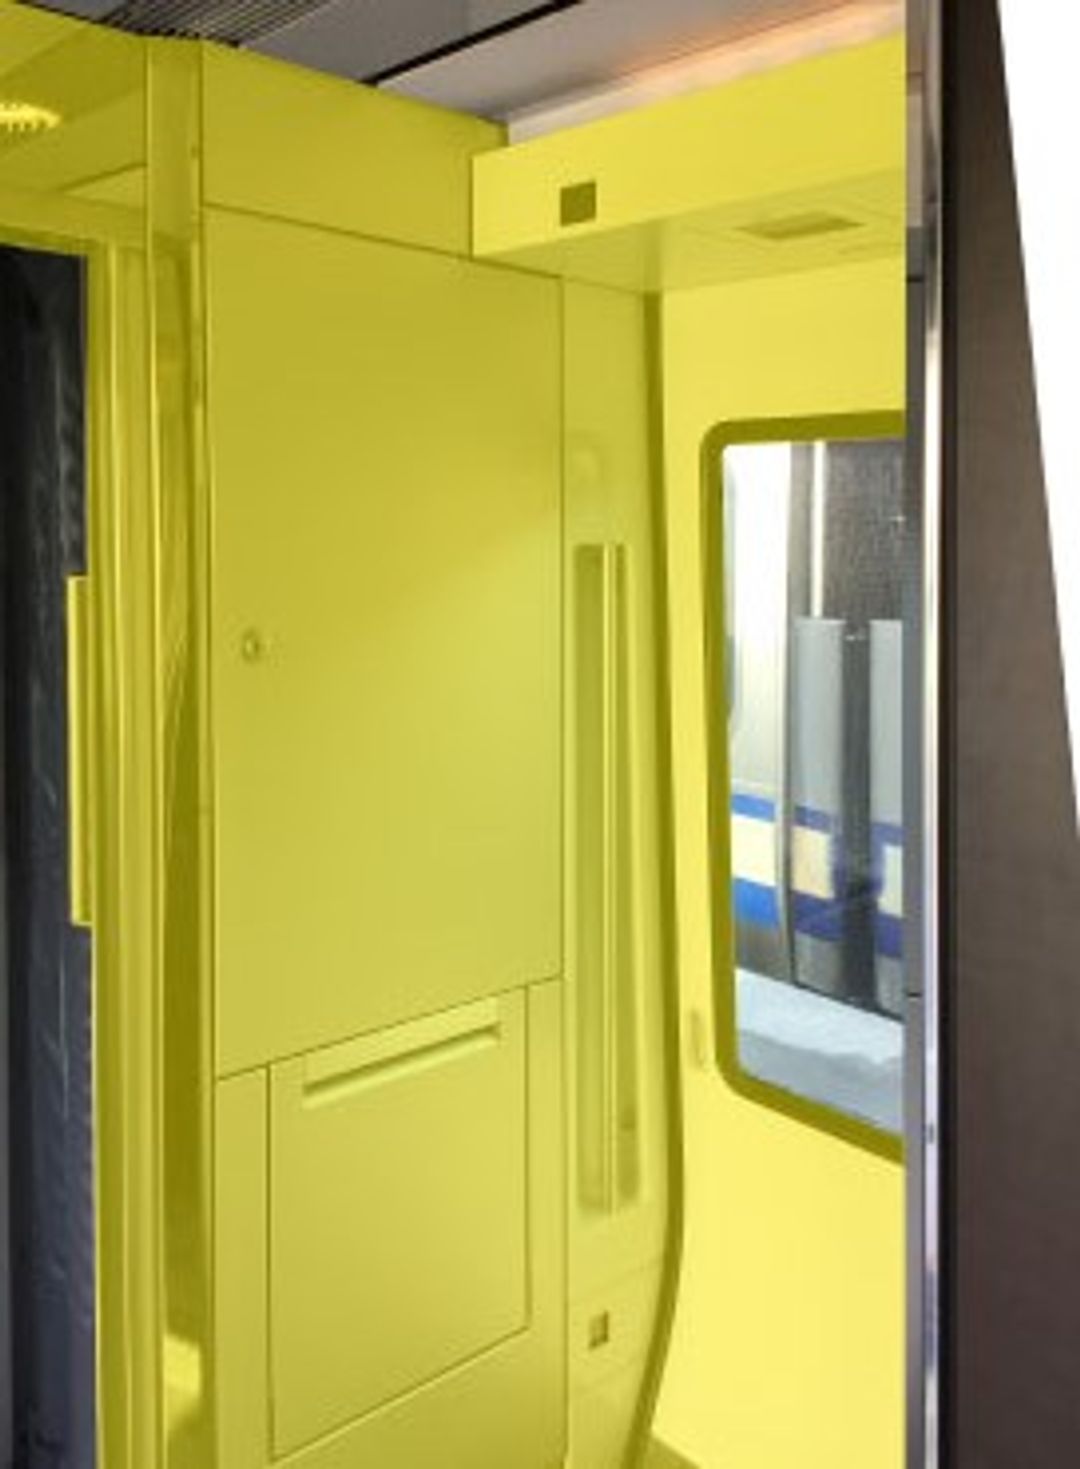 &nbsp; 新幹線・特快列車車卡間的消毒位置　※消毒位置為相片中黃色標示部份&nbsp;&nbsp;